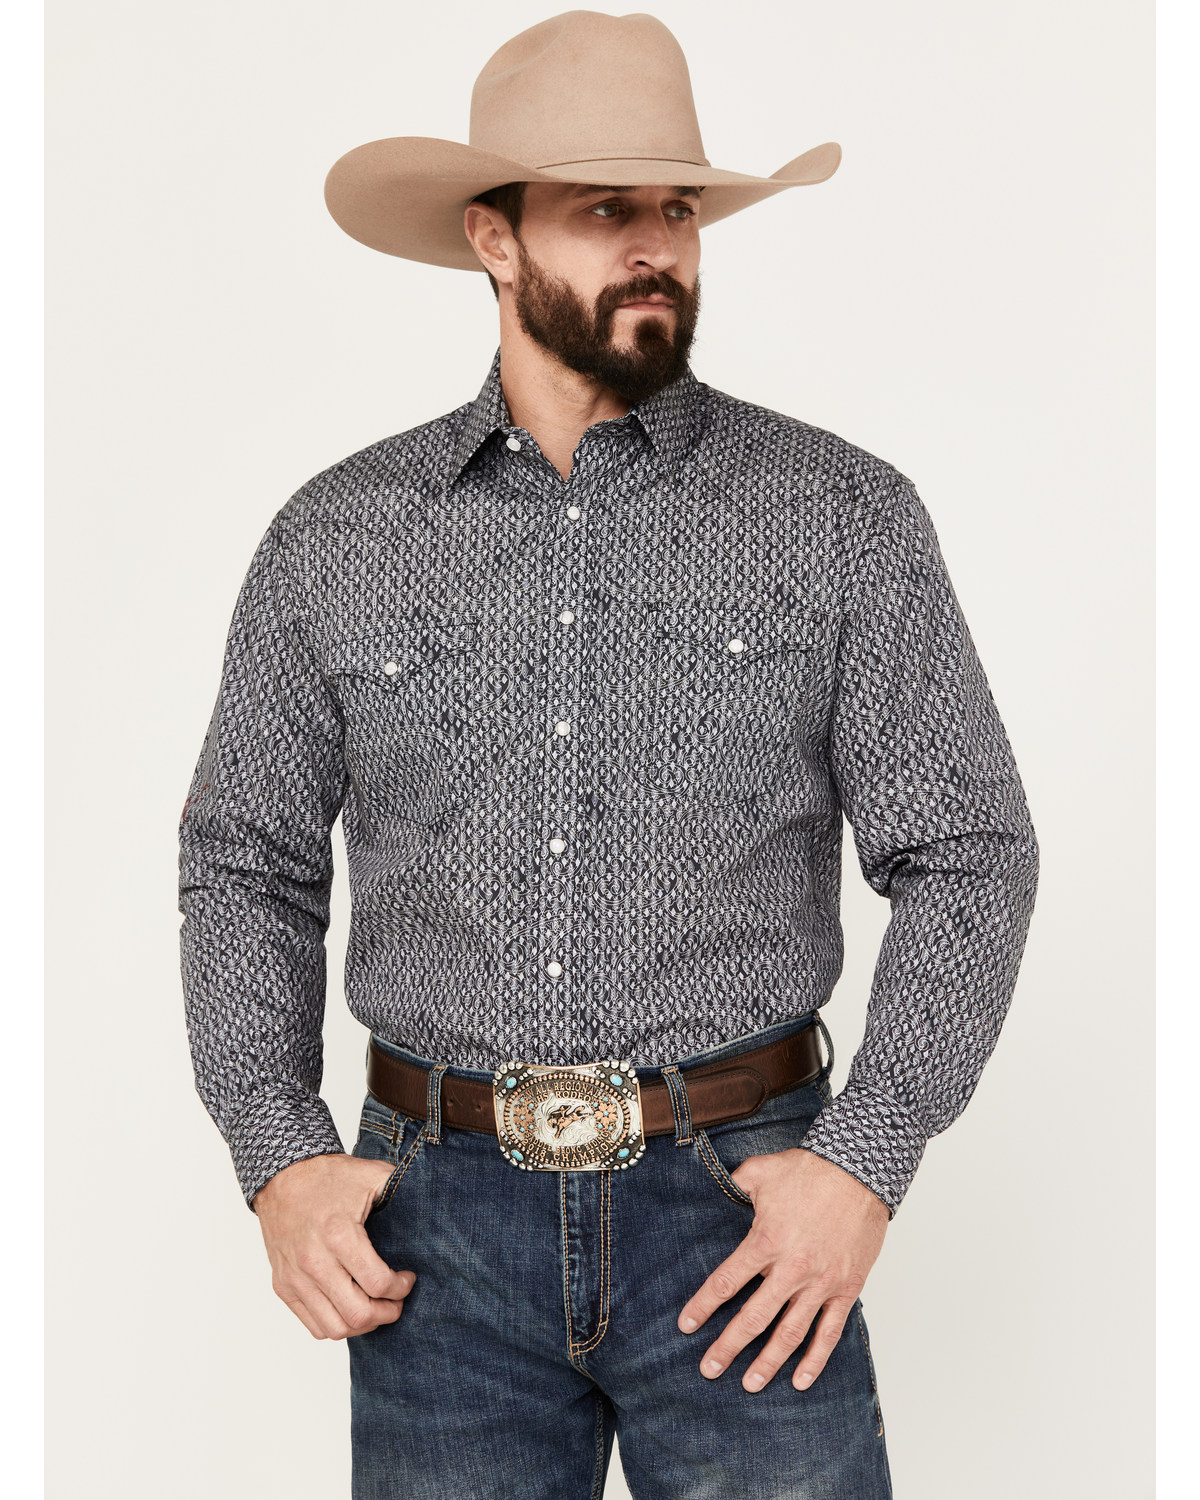 Rough Stock by Panhandle Men's Paisley Geo Print Long Sleeve Western Pearl Snap Shirt